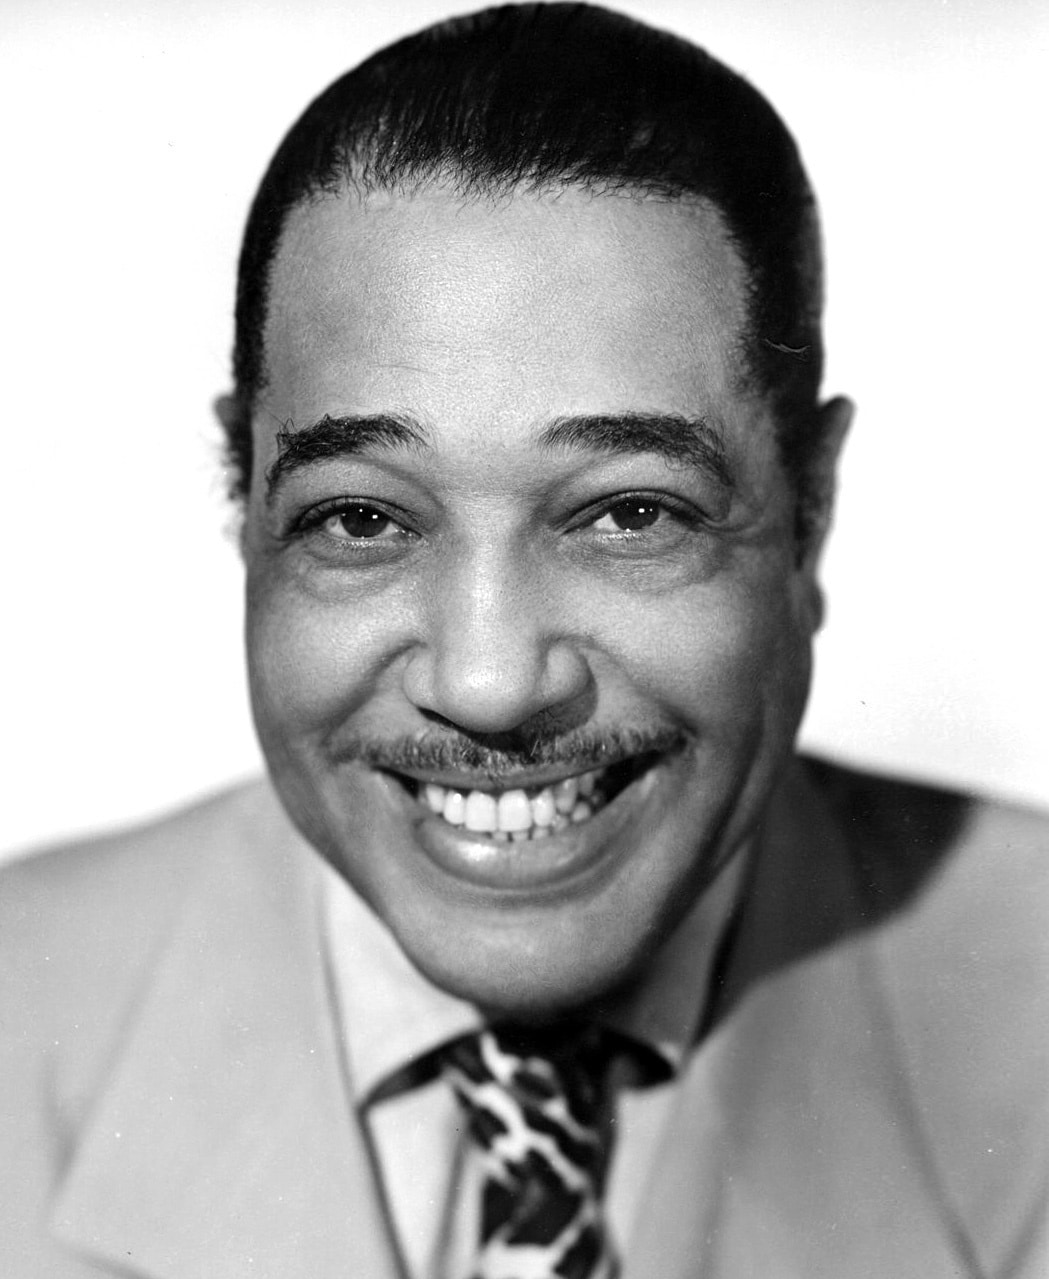 Black and white headshot of Duke Ellington smiling